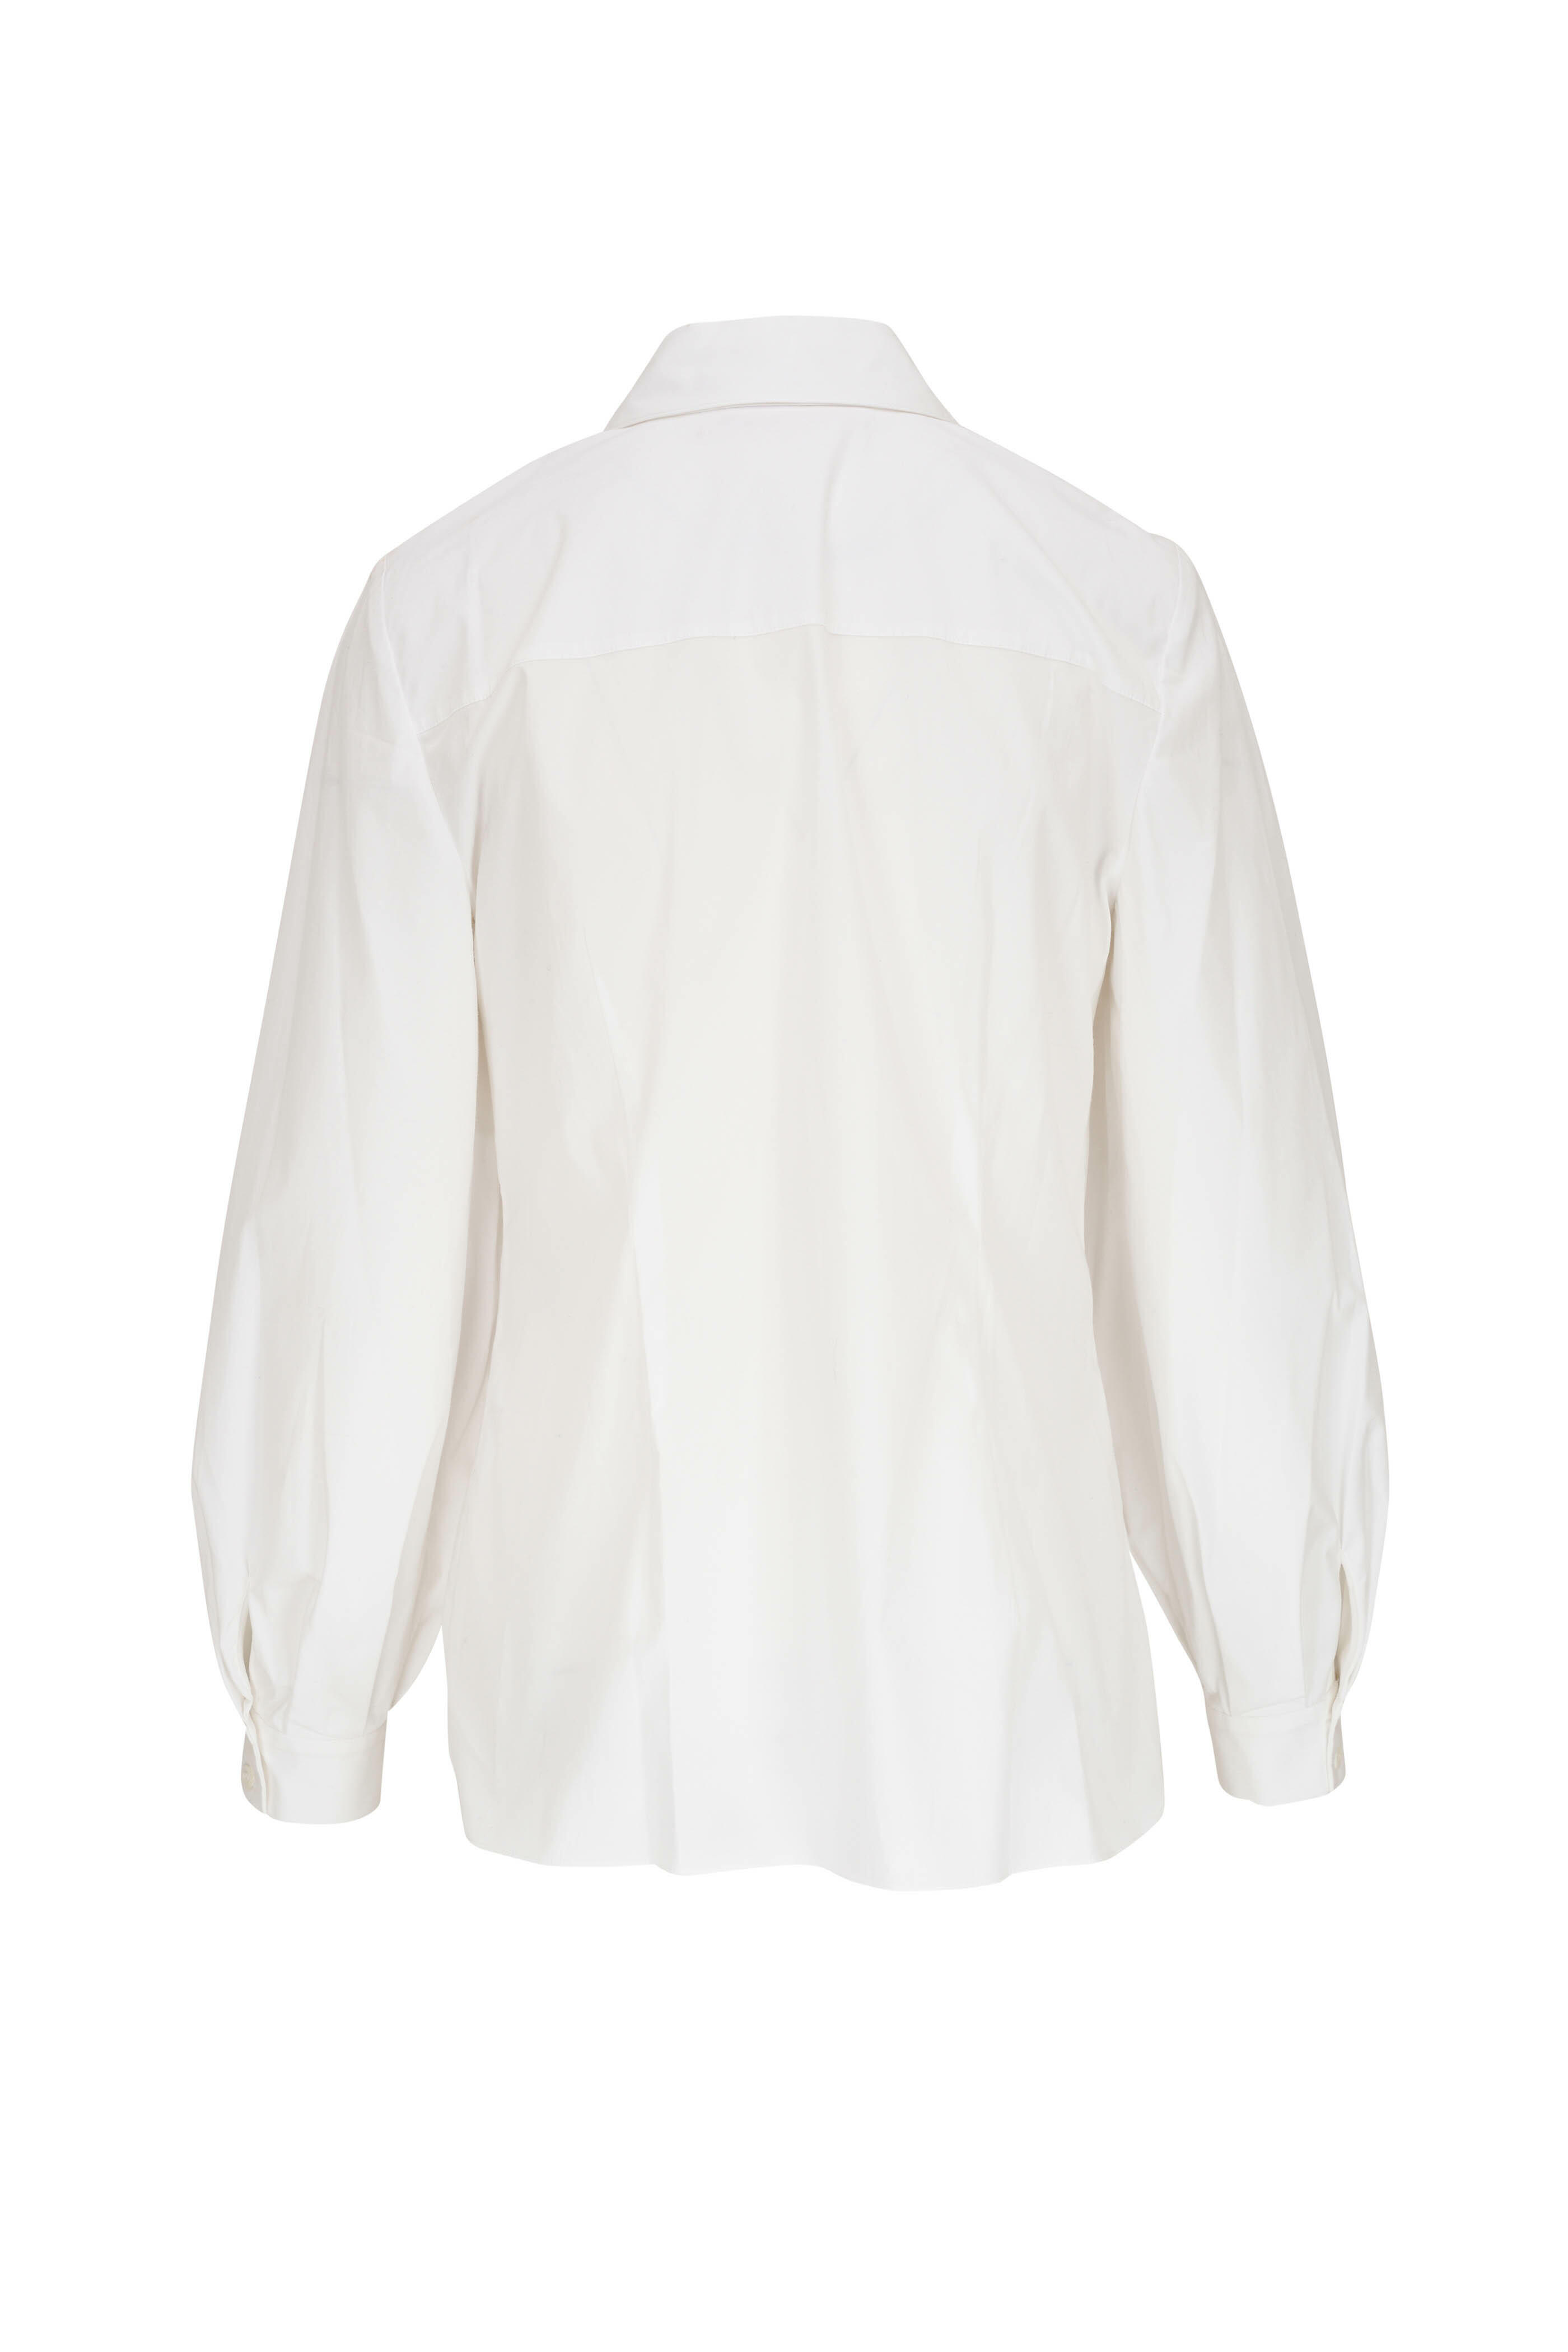 Carolina Herrera short-sleeve cotton shirt - Neutrals